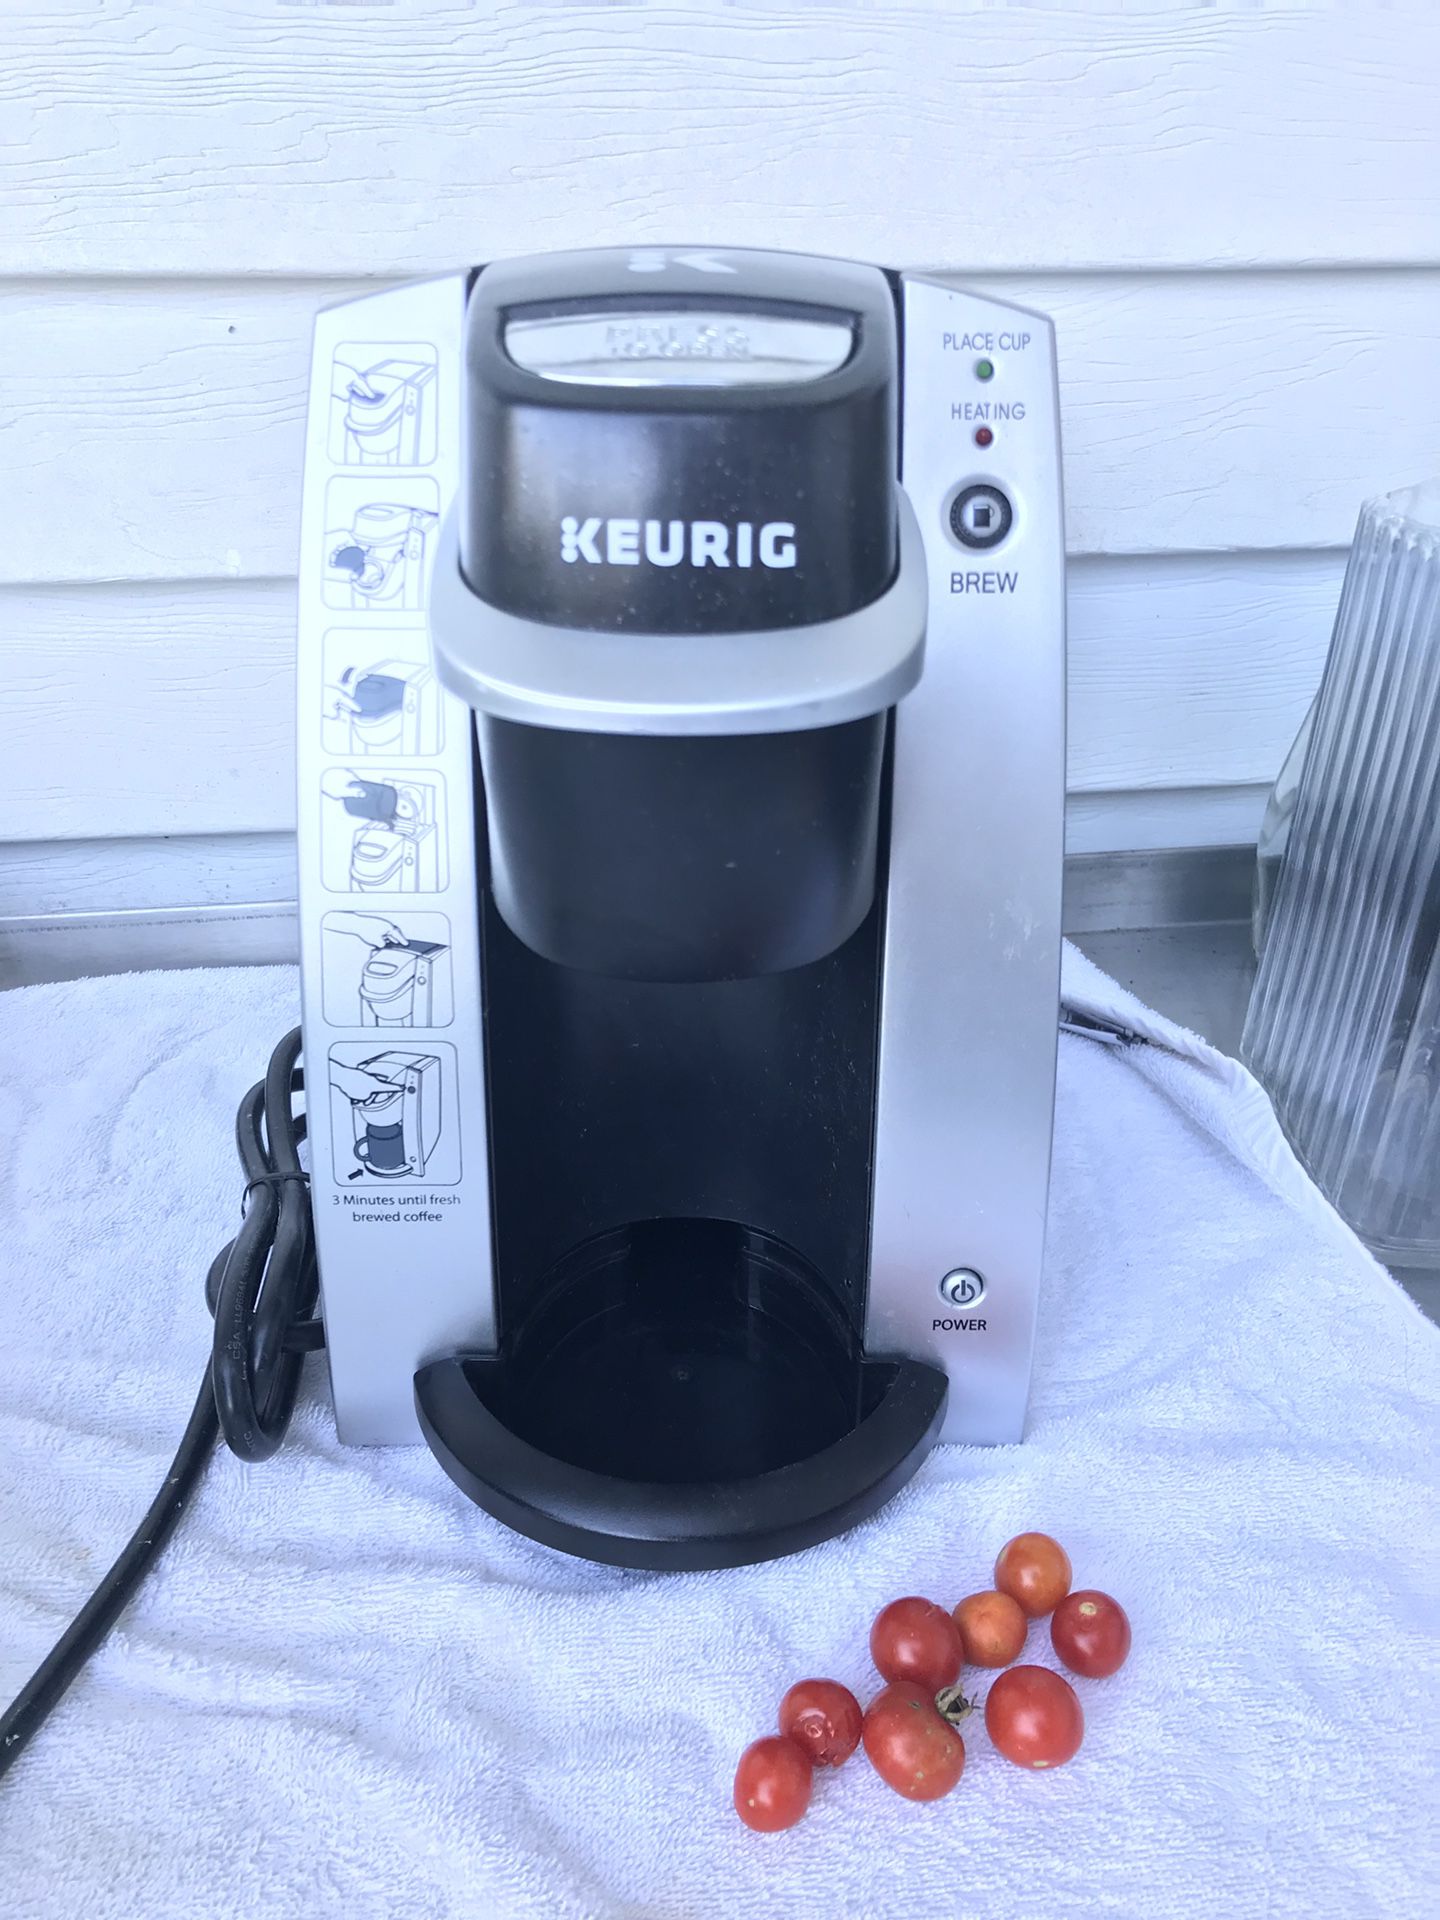 Keurig Commercial Brewer kcup coffee machine maker